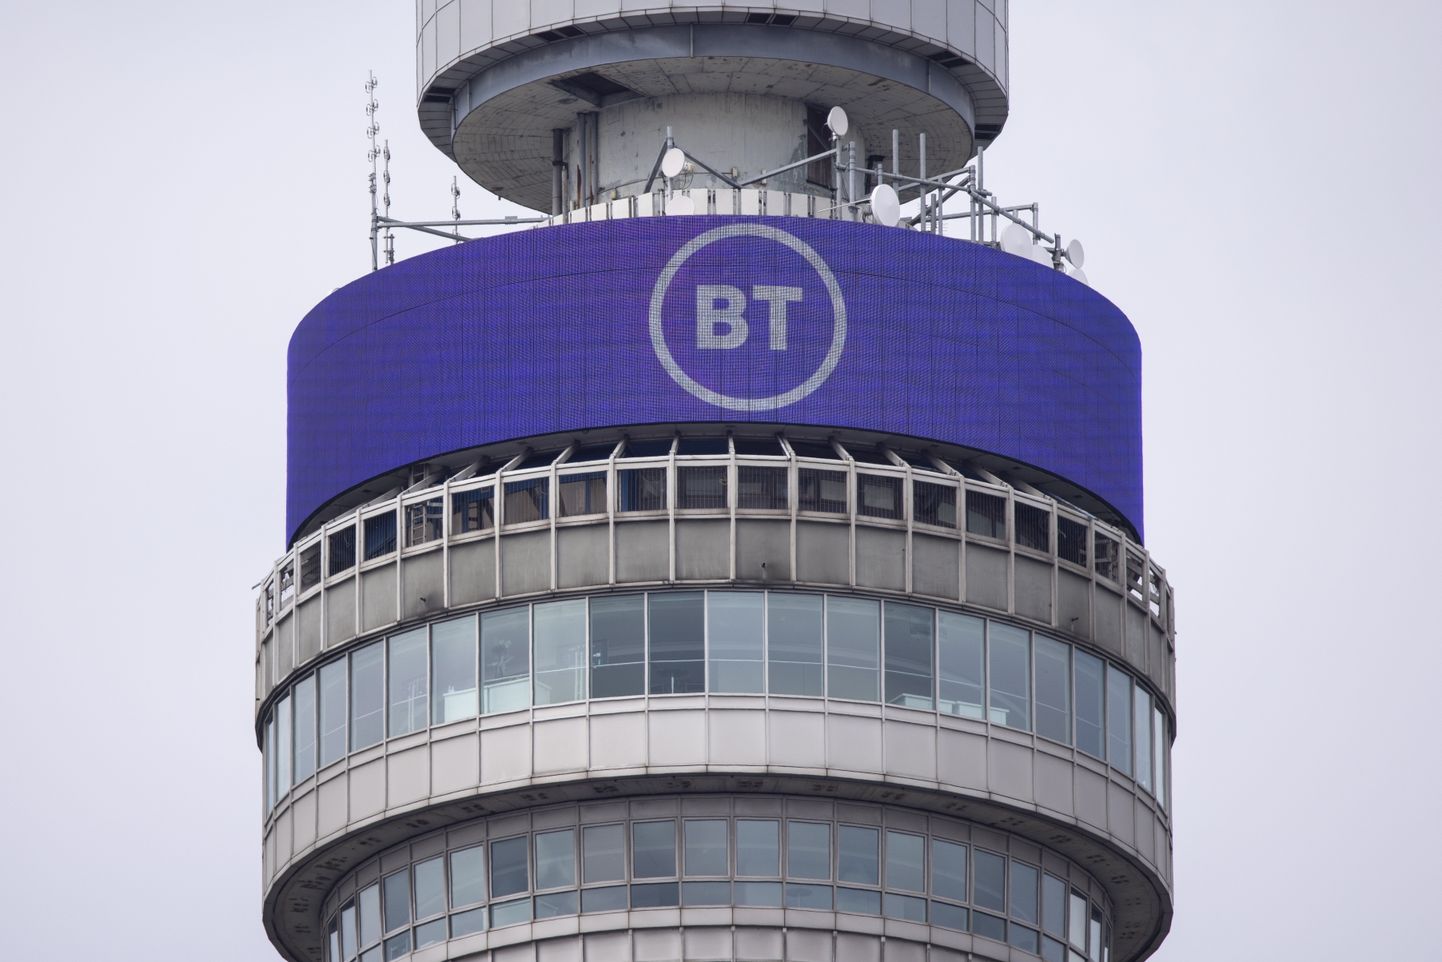 BT torn Londonis. Varem oli nende nimi British Telecom.